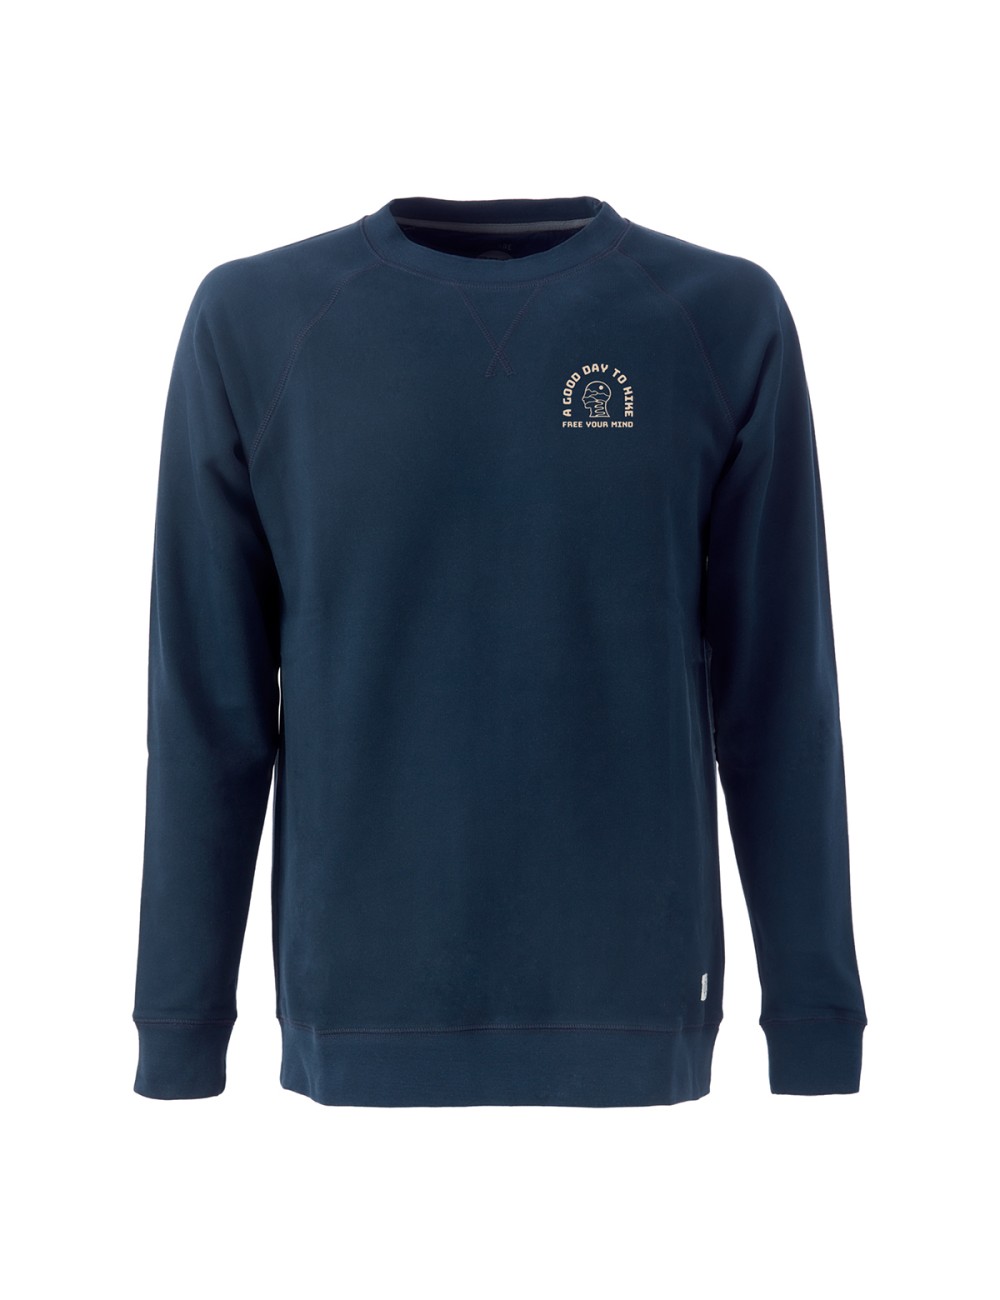 ZRCL Hike Sweater - Blue